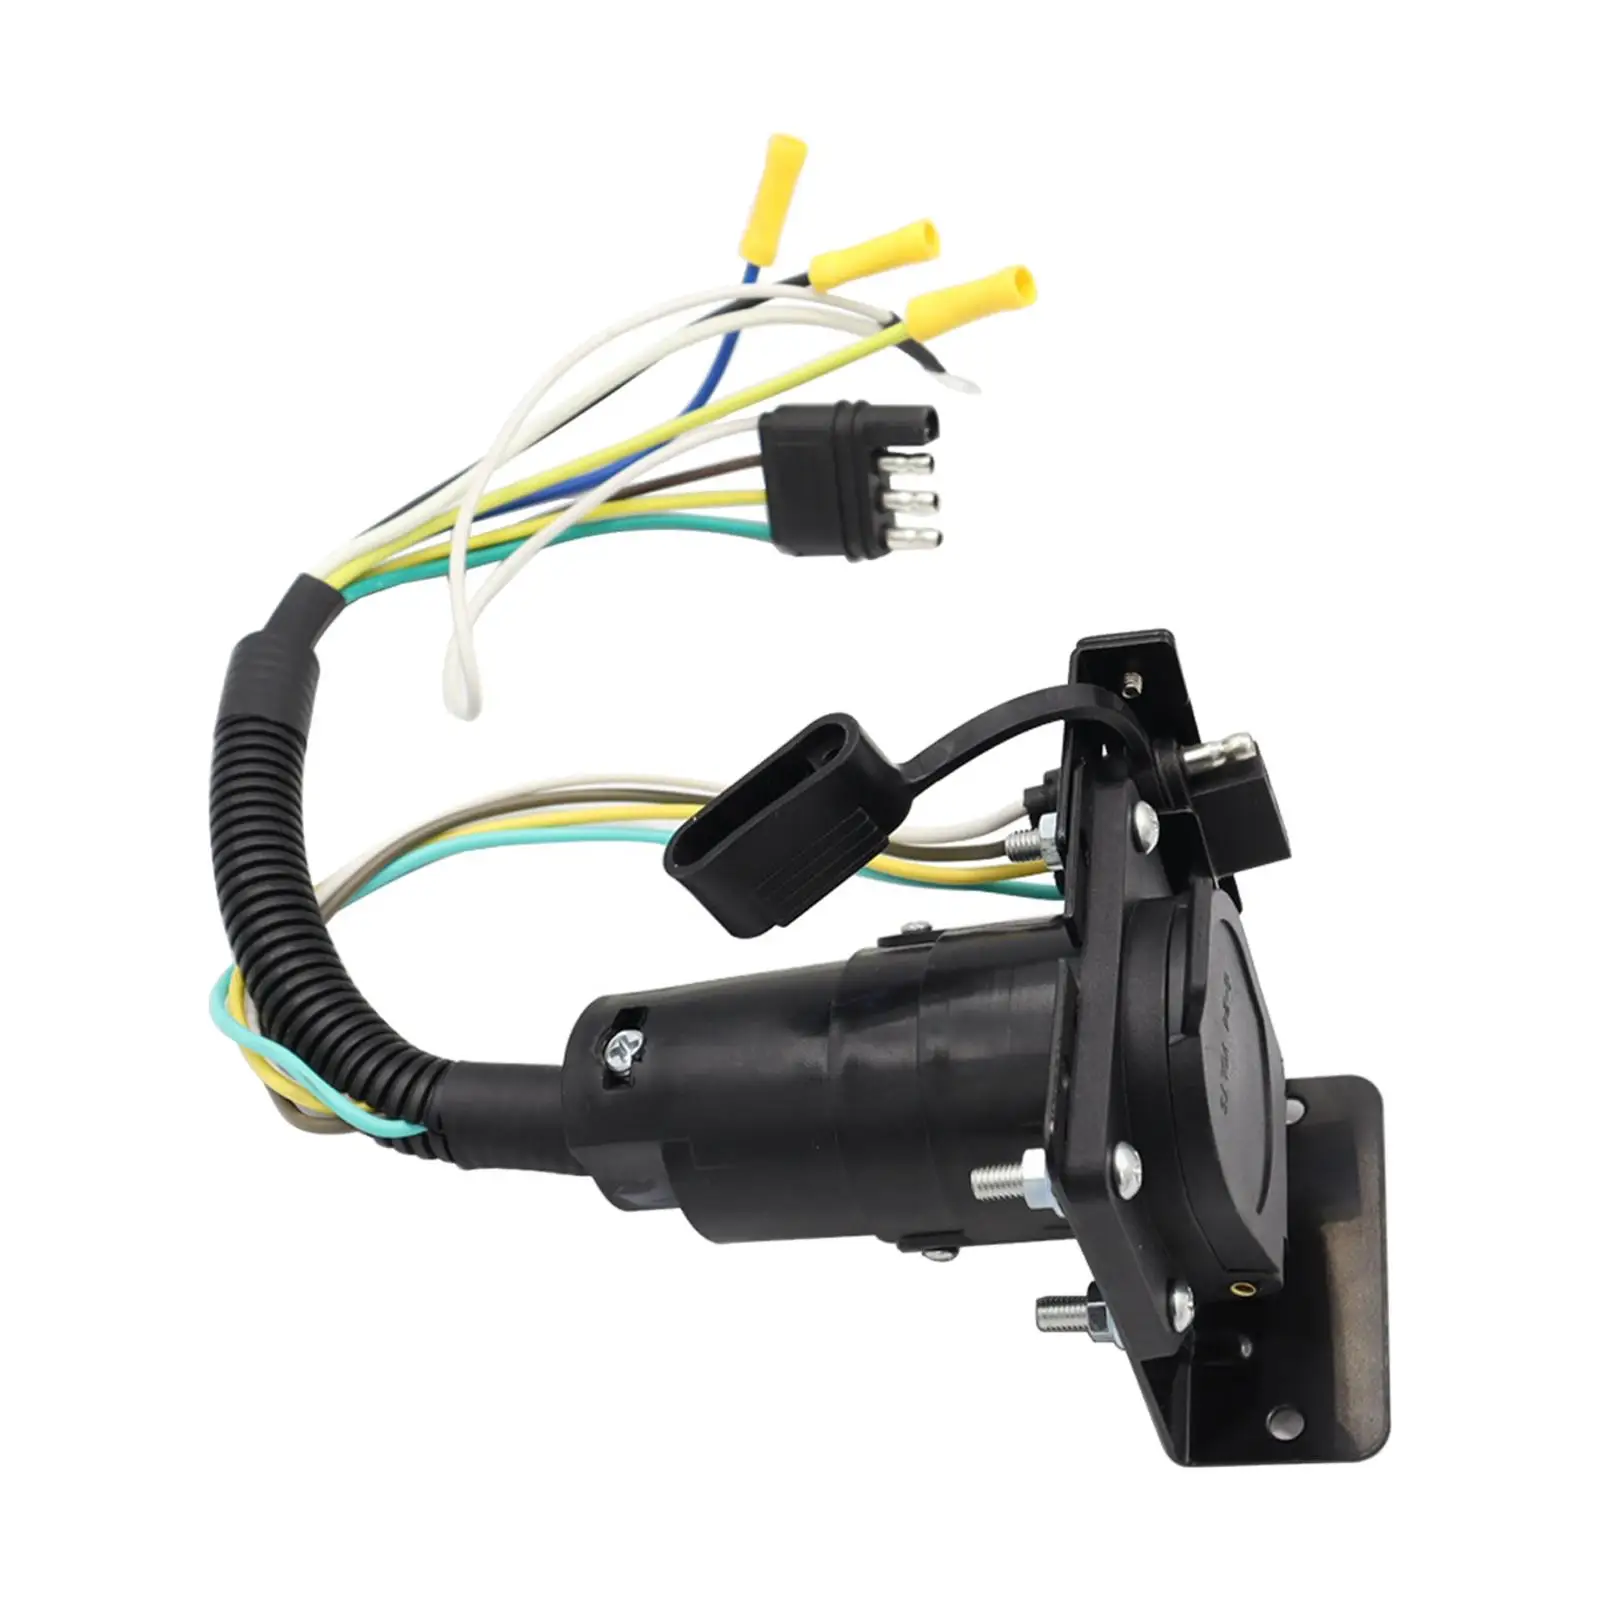 Adapter Connector Kit Professional Accessories Caravan